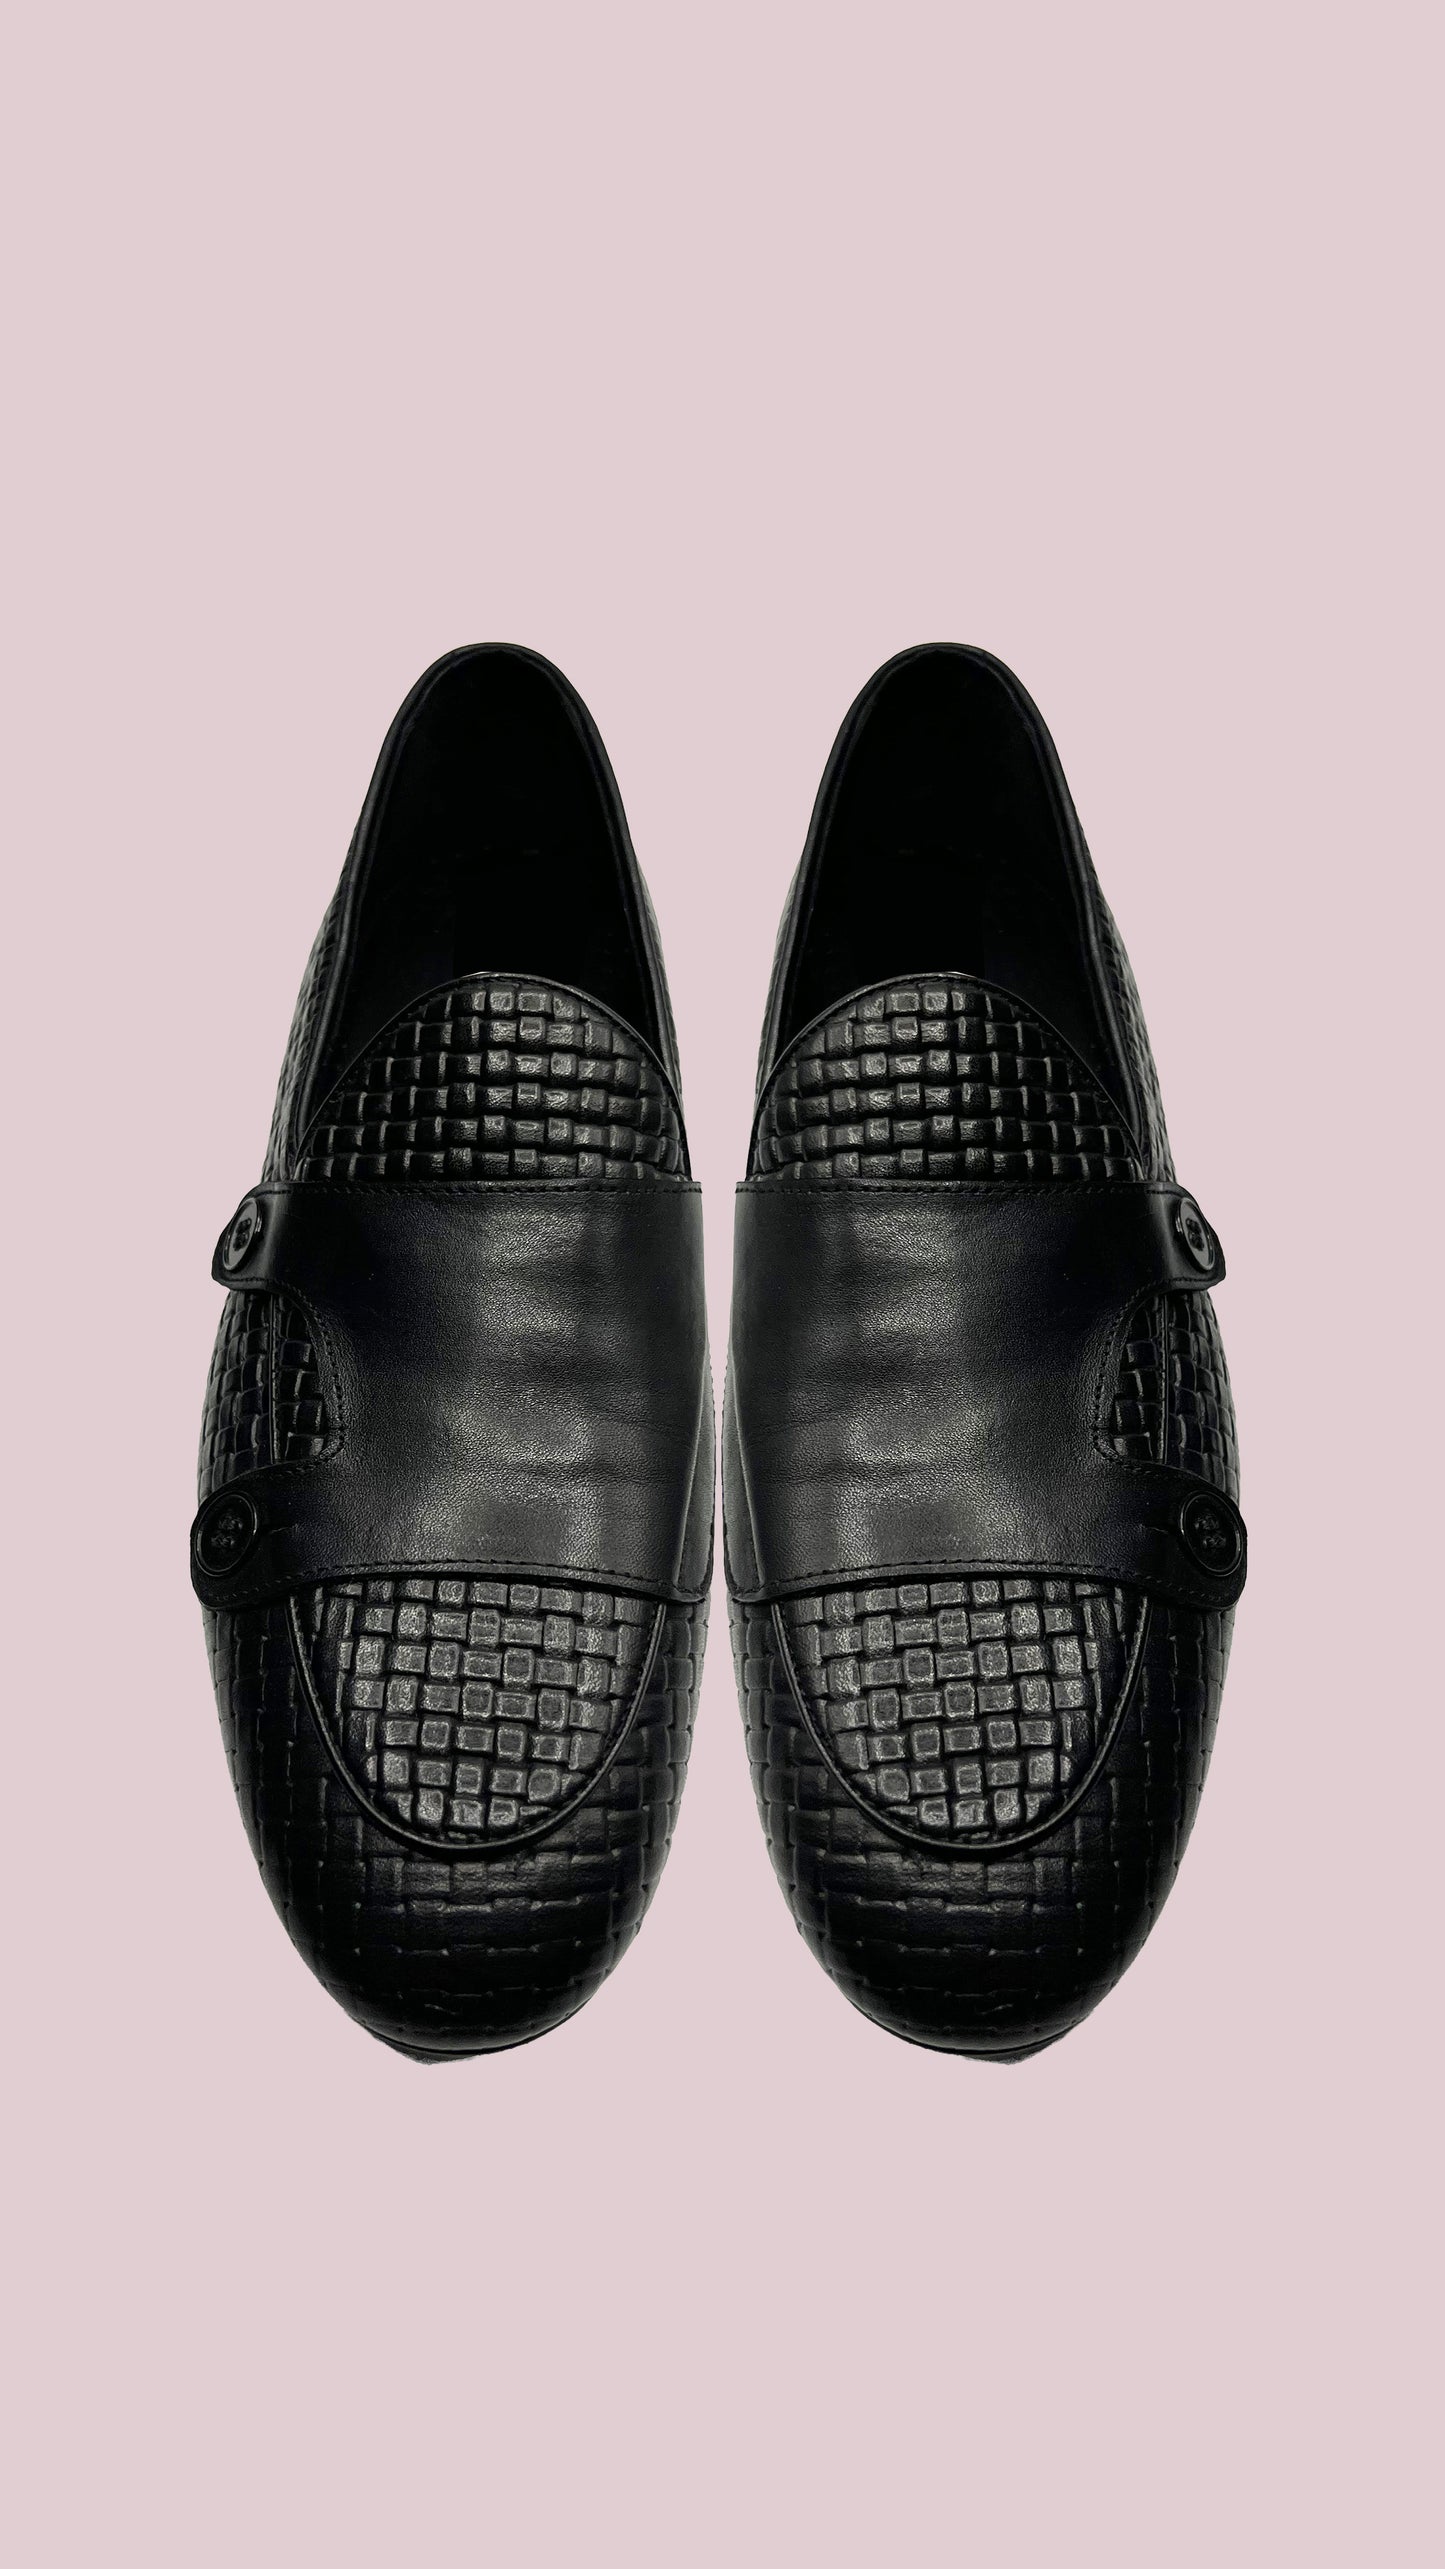 BLACK SHOES SHOES Ph inventory shoes Vercini